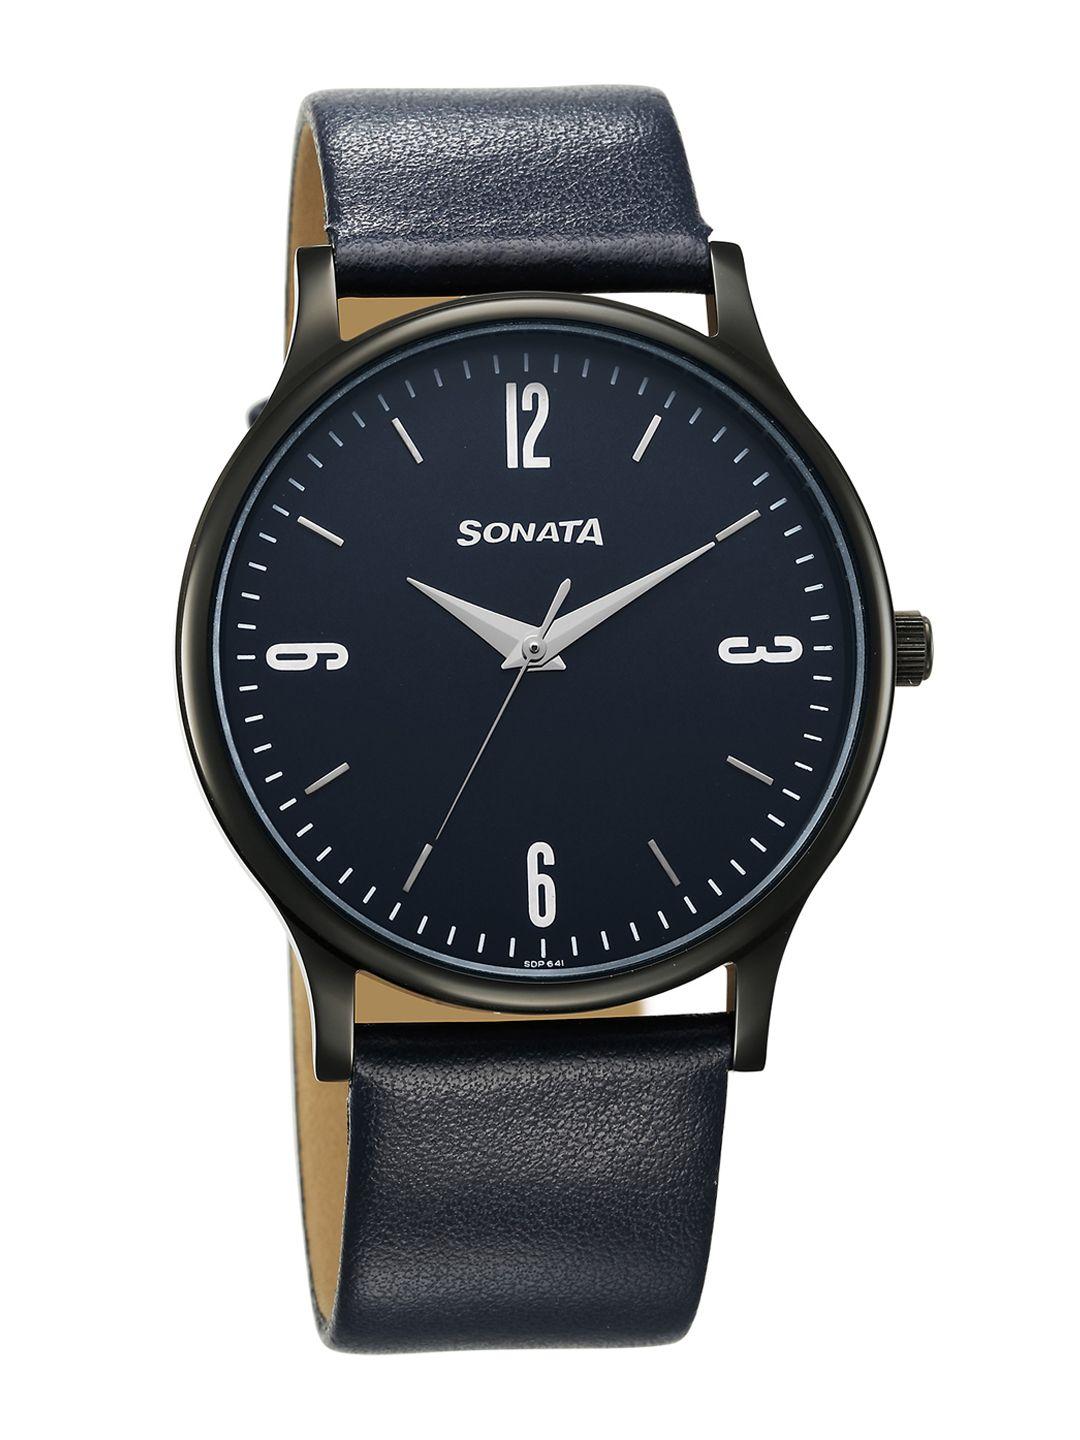 sonata men brass dial & leather straps analogue watch 77105nl11w